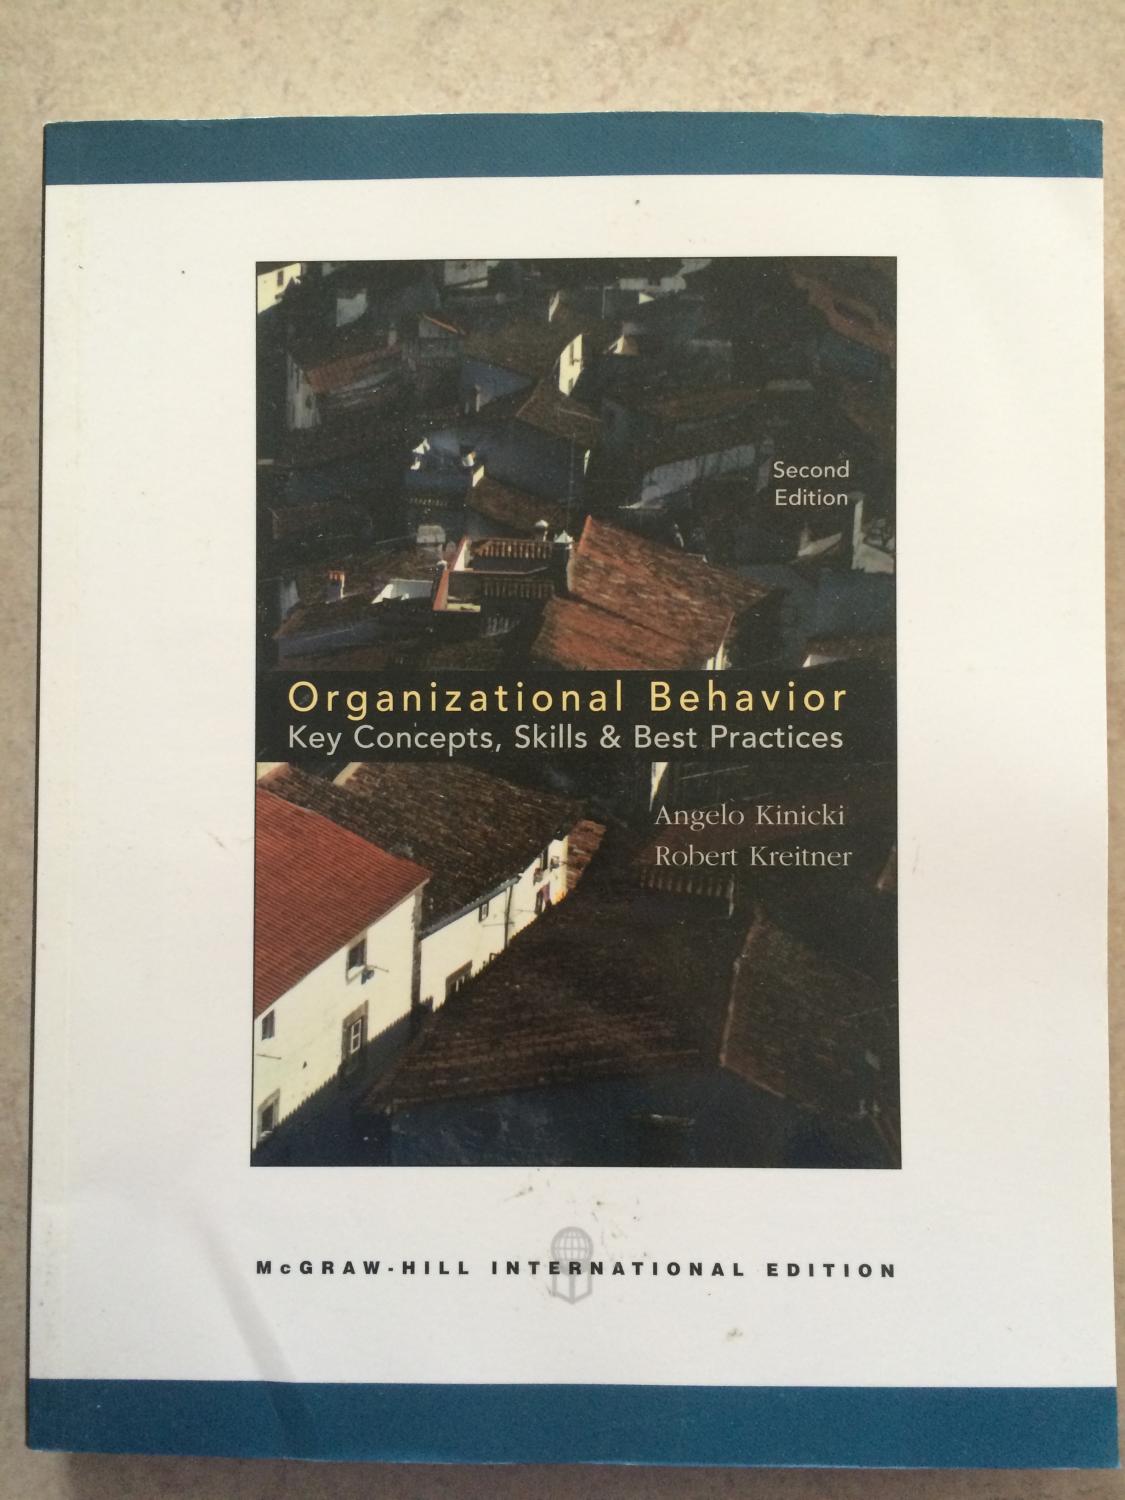 INTERNATIONAL EDITION---Organizational Behavior, 2nd edition - Robert Kreitner and Angelo Kinicki